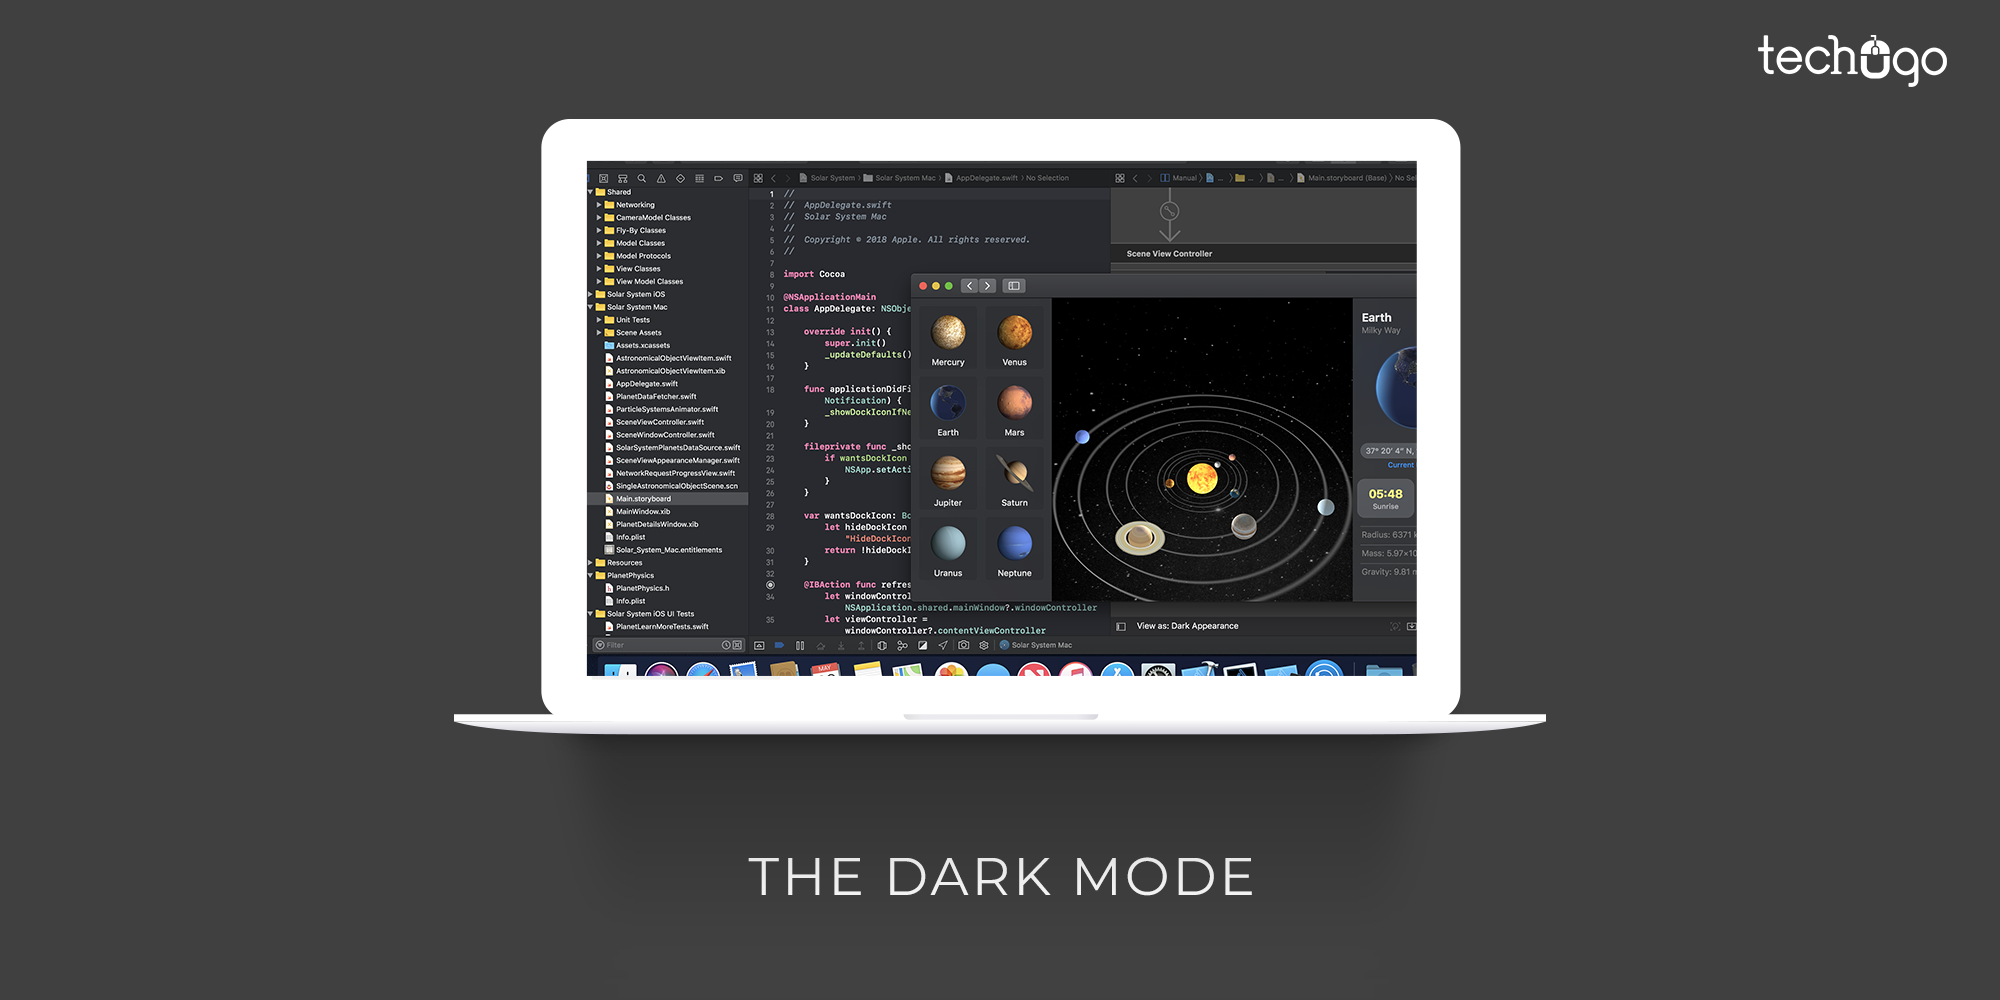 The Dark Mode